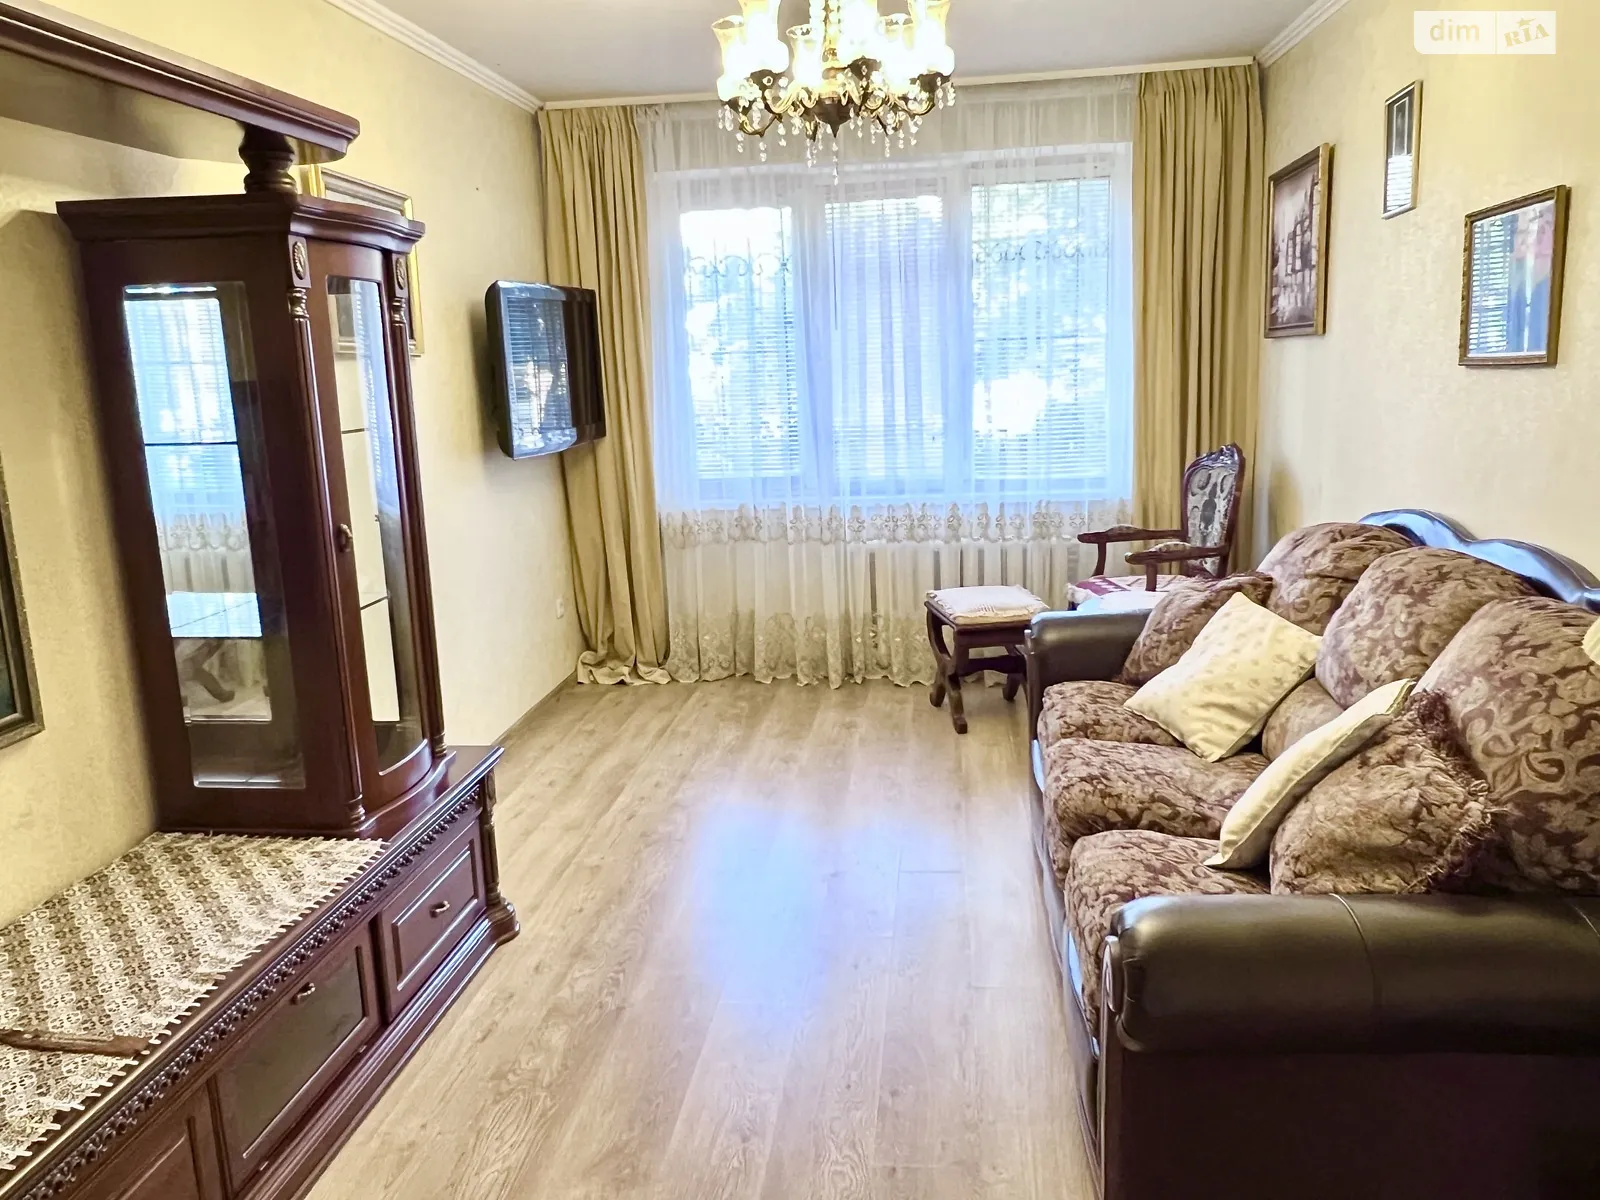 Продается комната 60.7 кв. м в Киеве, цена: 10000000 $ - фото 1